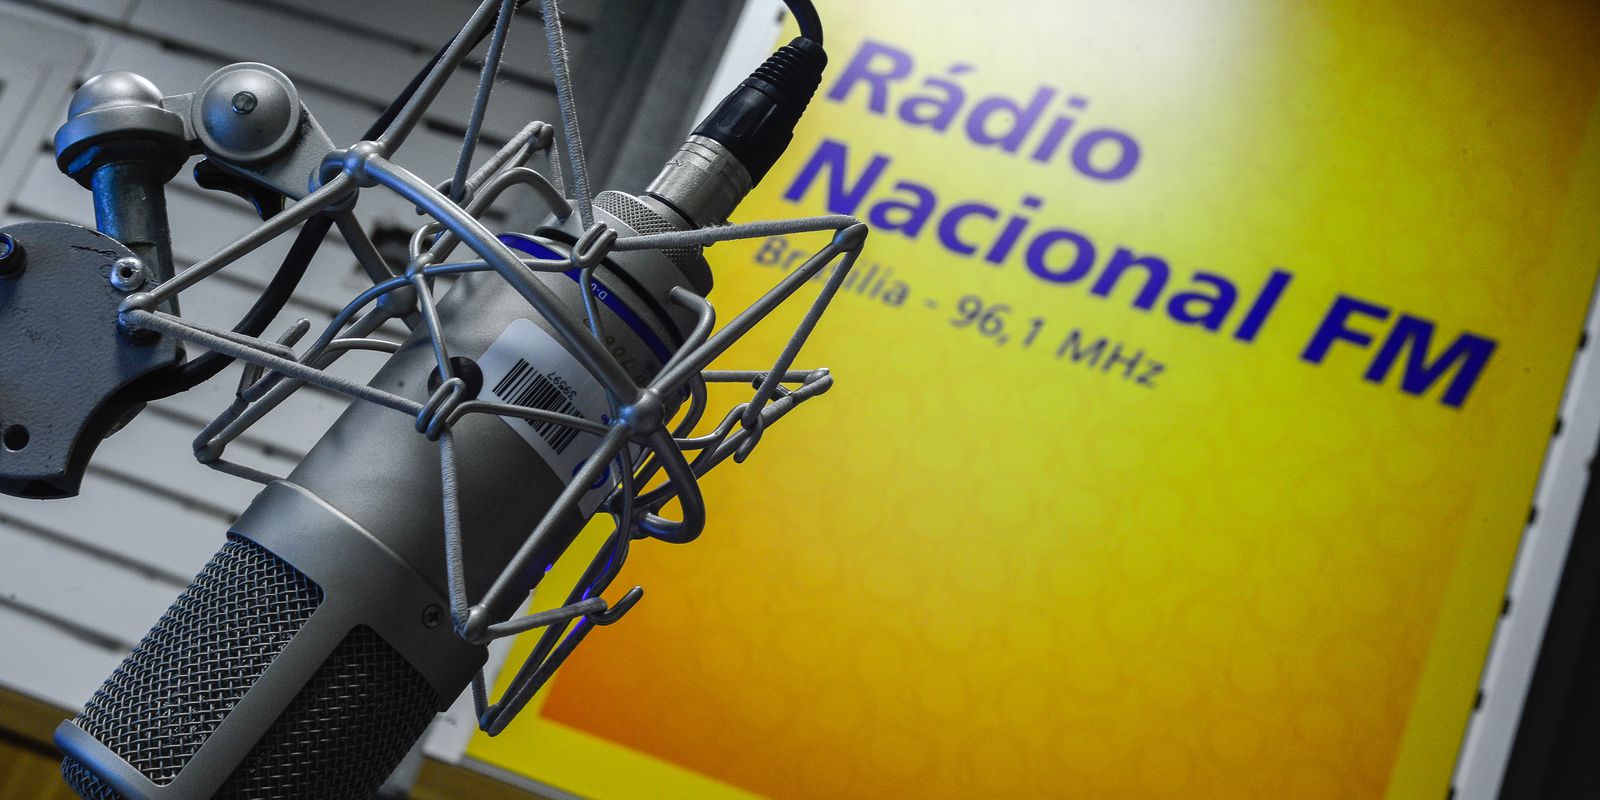 Rádio Nacional de Brasília starts celebrating 64 years this Saturday